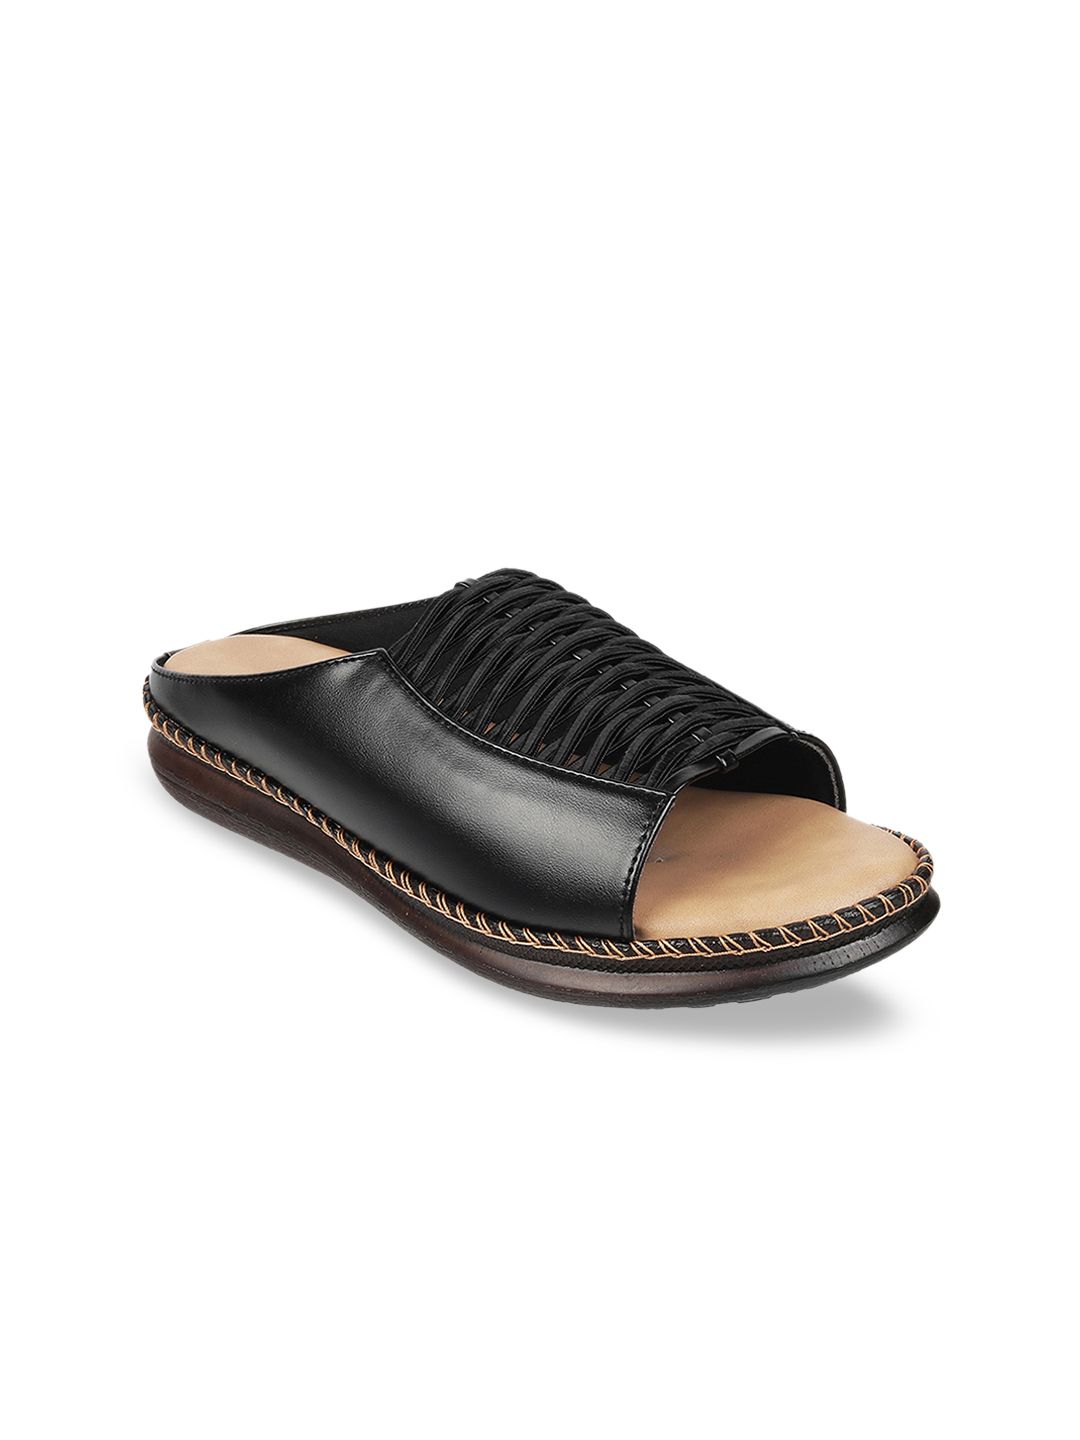 WALKWAY by Metro Women Black Solid Sandals Price in India